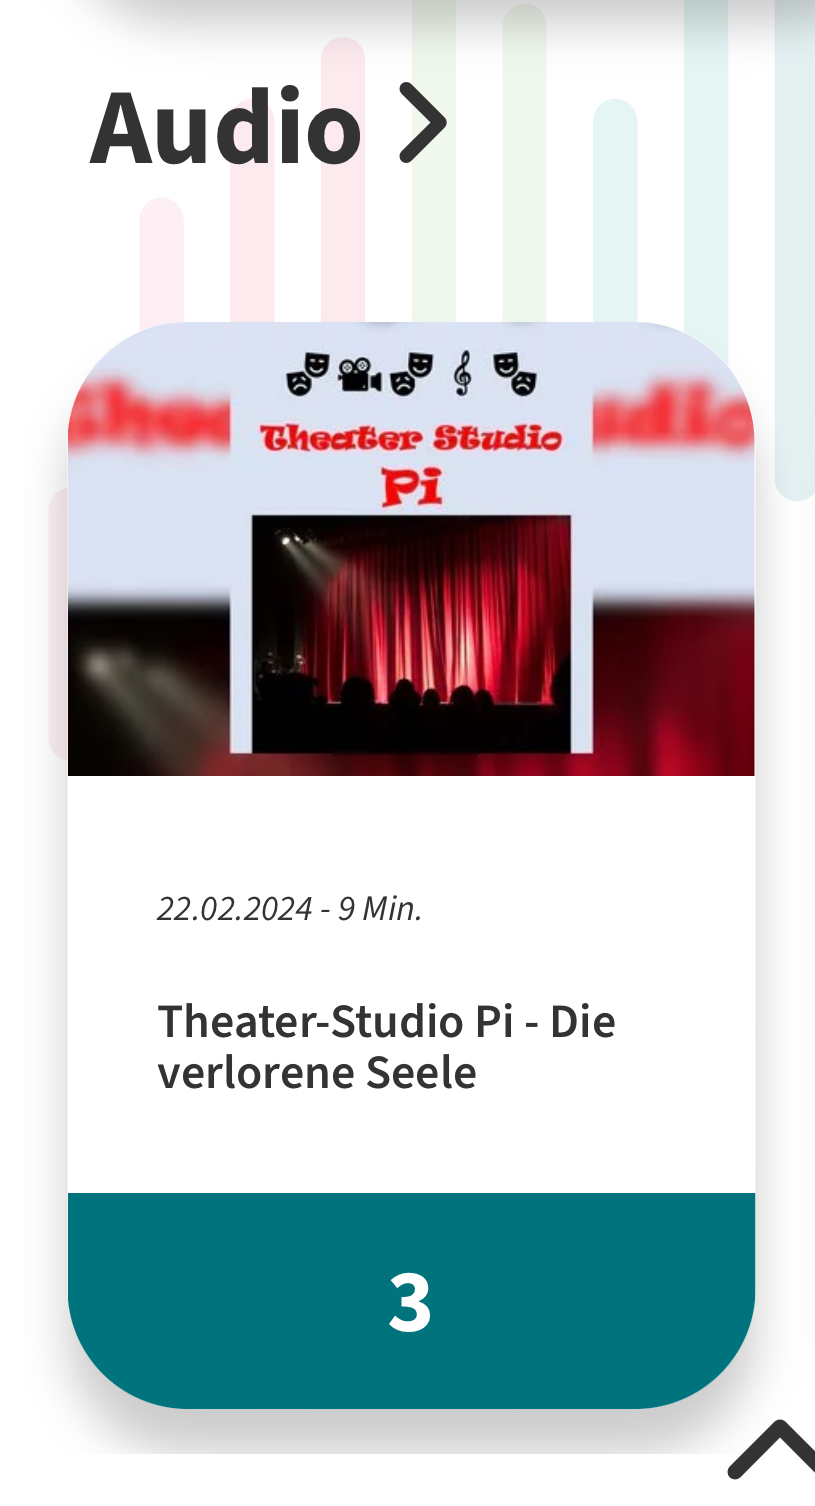 Theater-Studio Pi - Die verlorene Seele